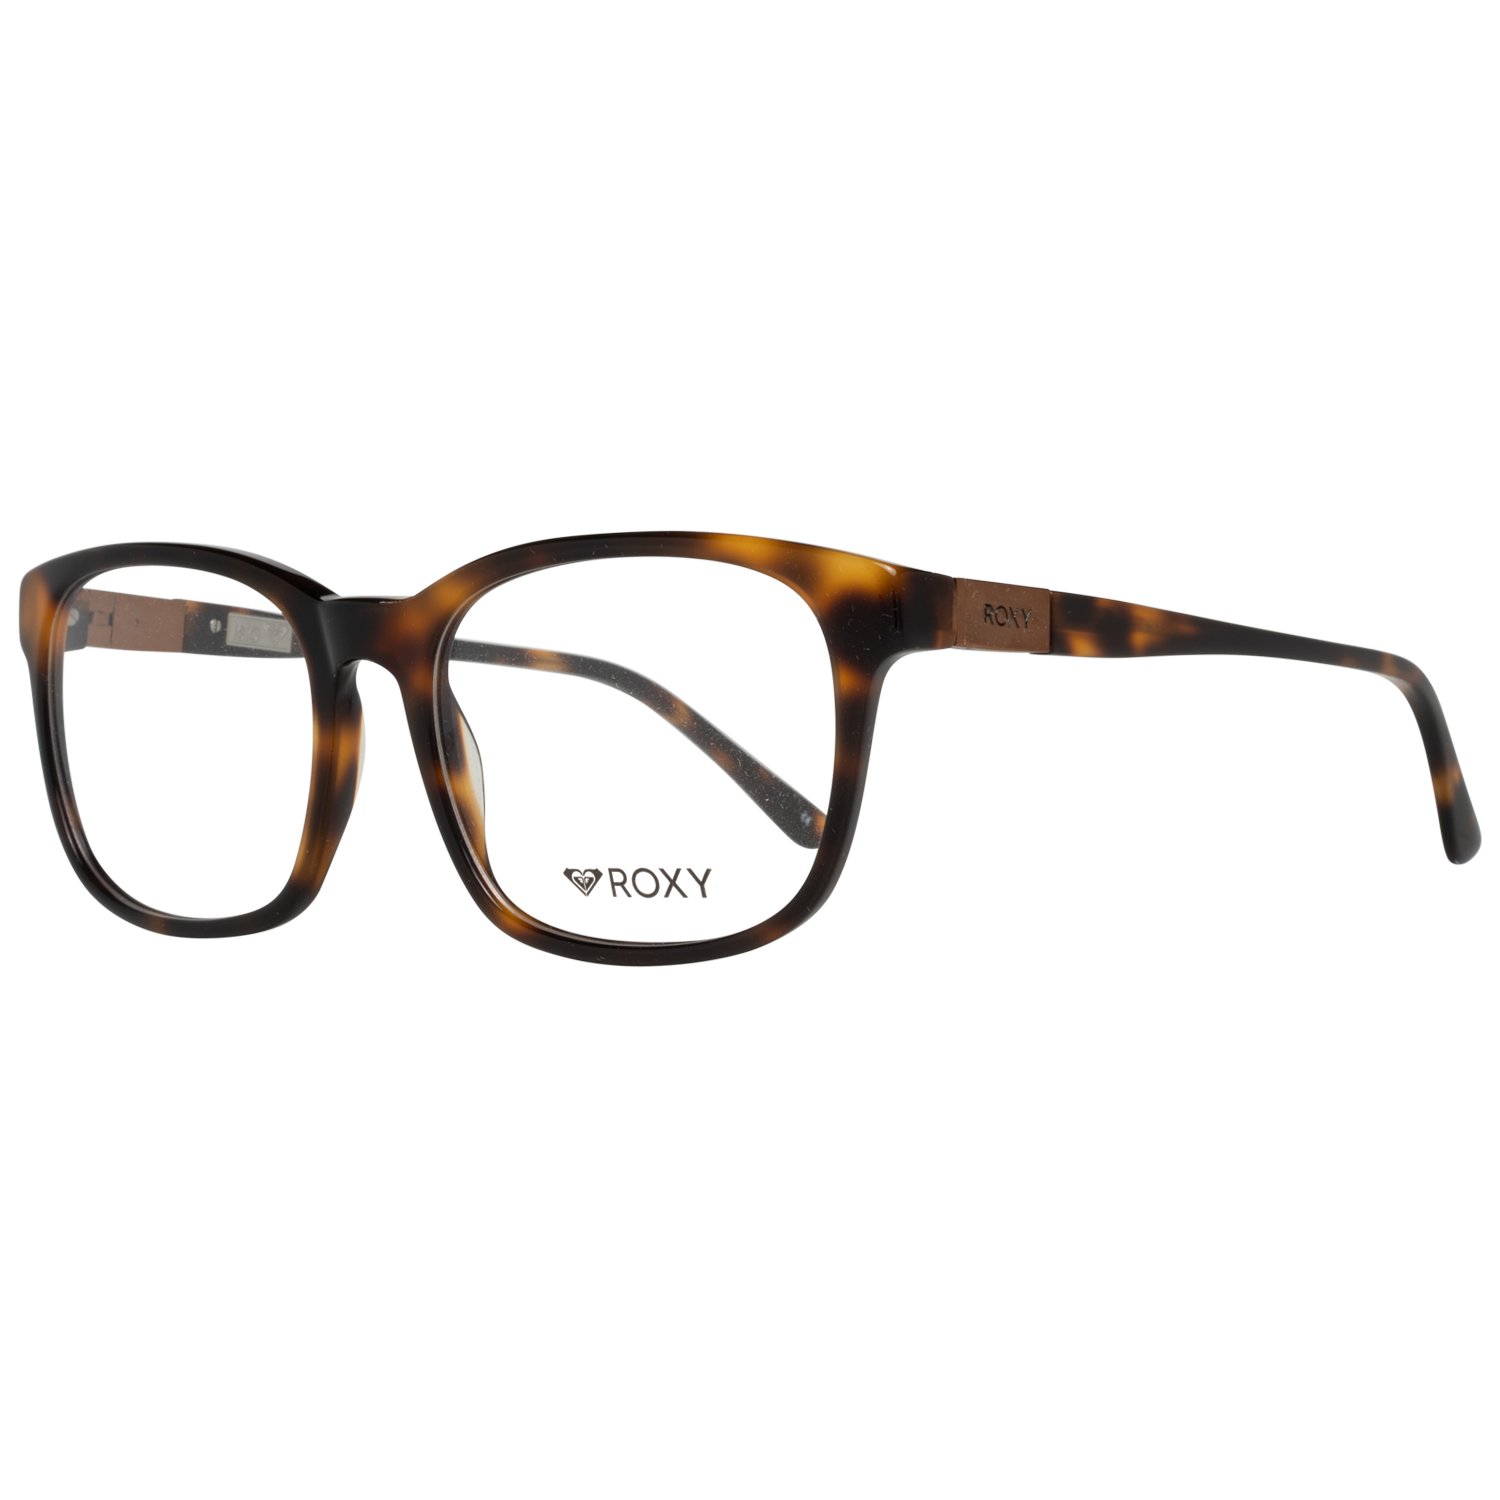 Roxy Frames Roxy Glasses Optical Frame ERJEG03027 ATOR 52 Eyeglasses Eyewear UK USA Australia 